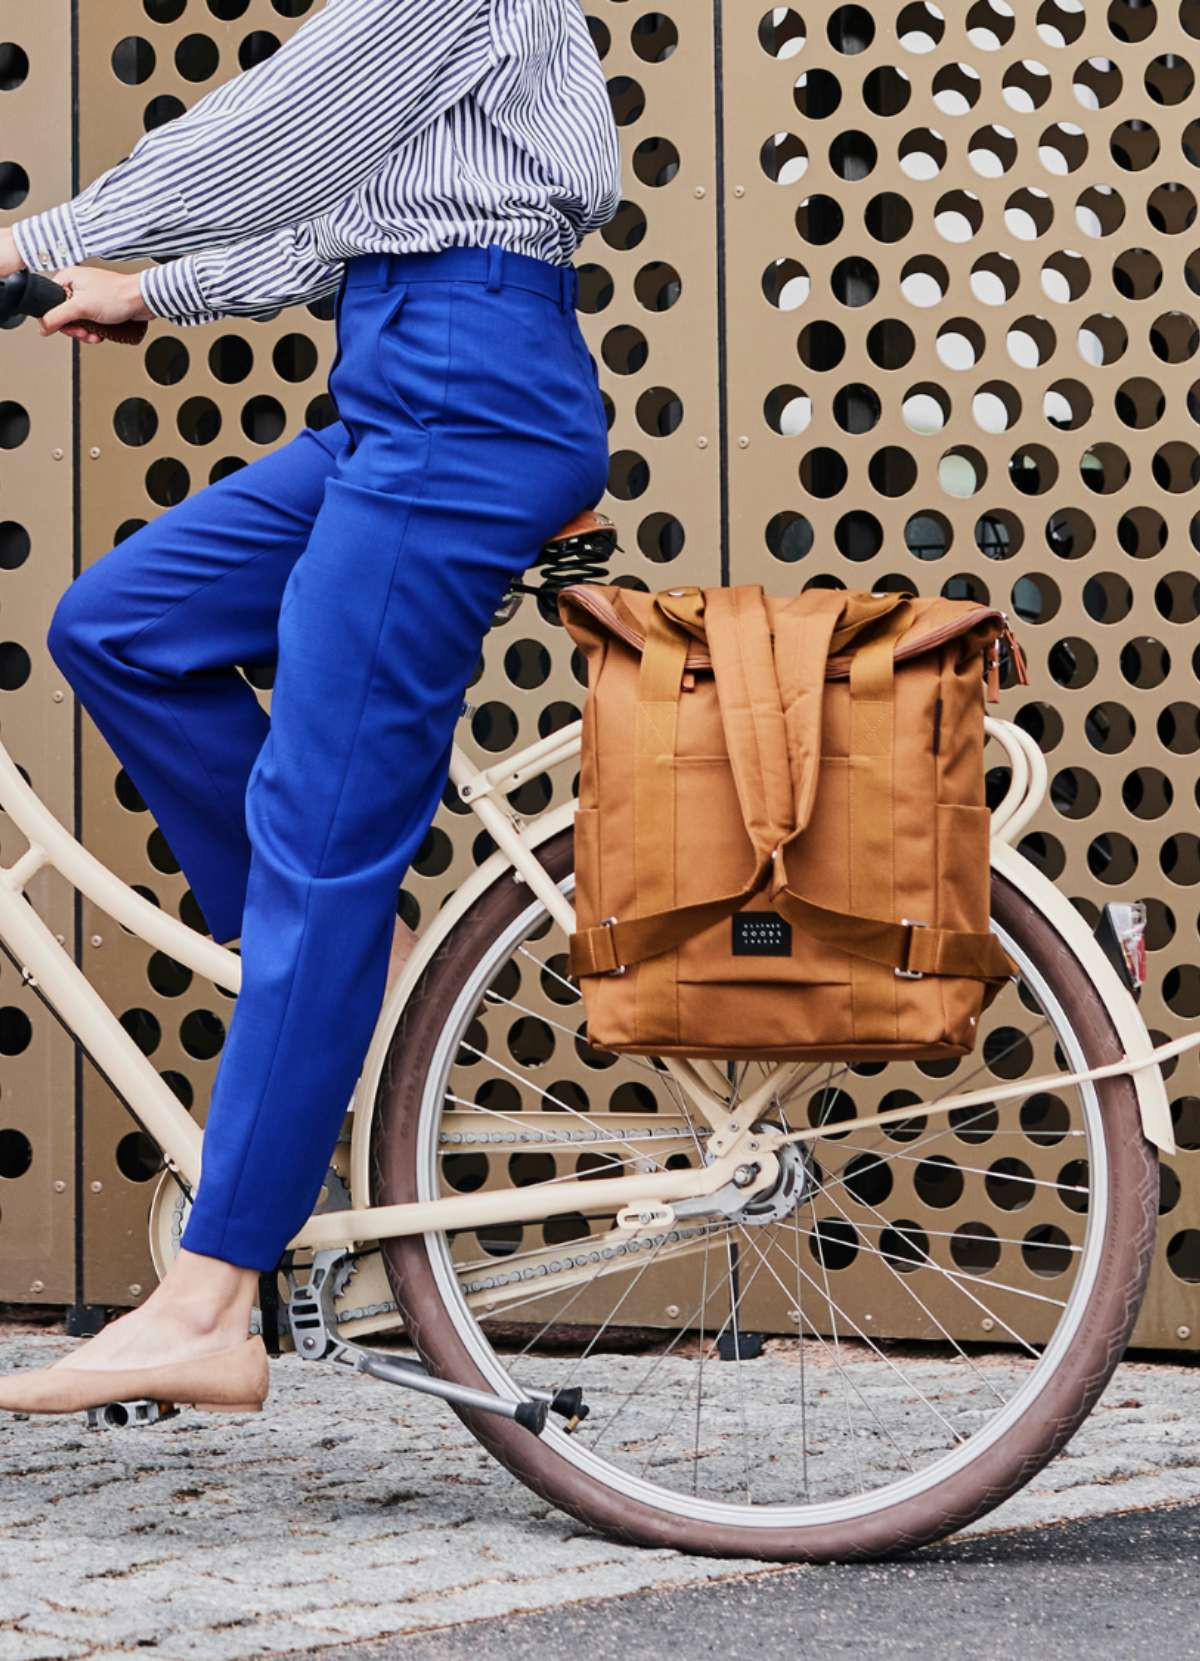 Sac à dos / Sacoche vélo Weather Goods Sweden - City BikePack